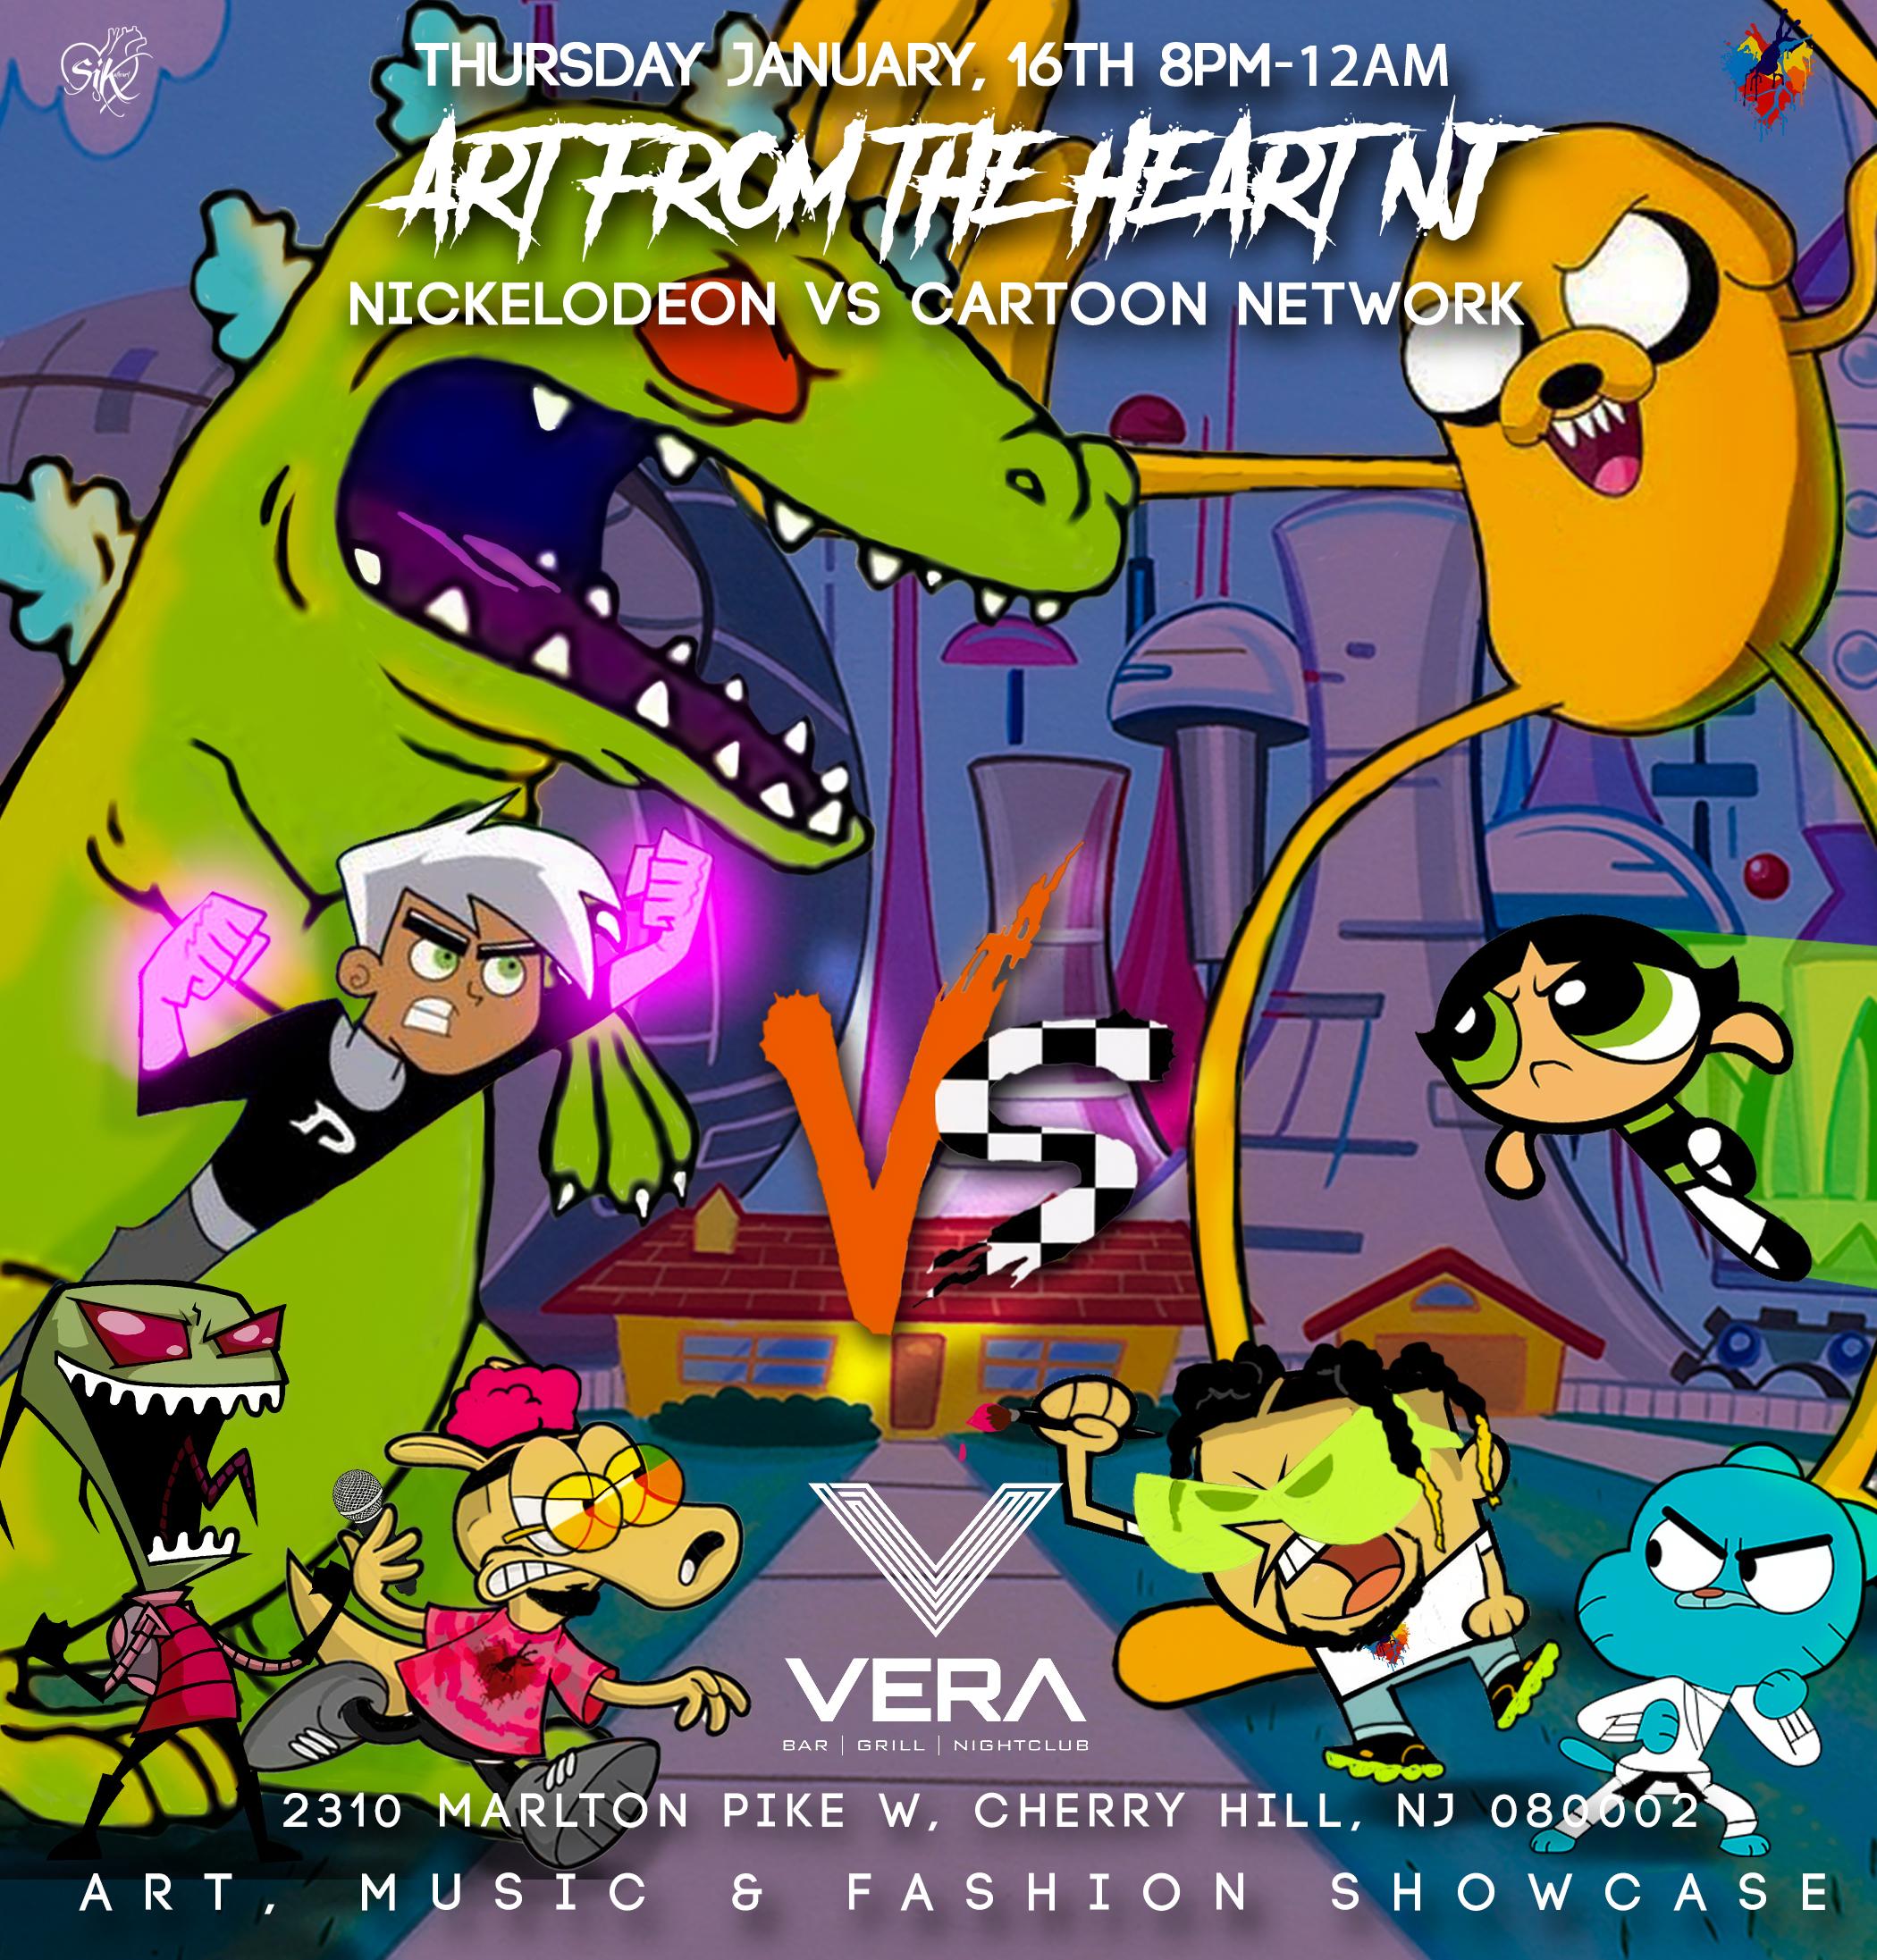 Art From The Heart NJ Nickelodeon vs Cartoon Network Art/Fashion Experience  - 16 JAN 2020